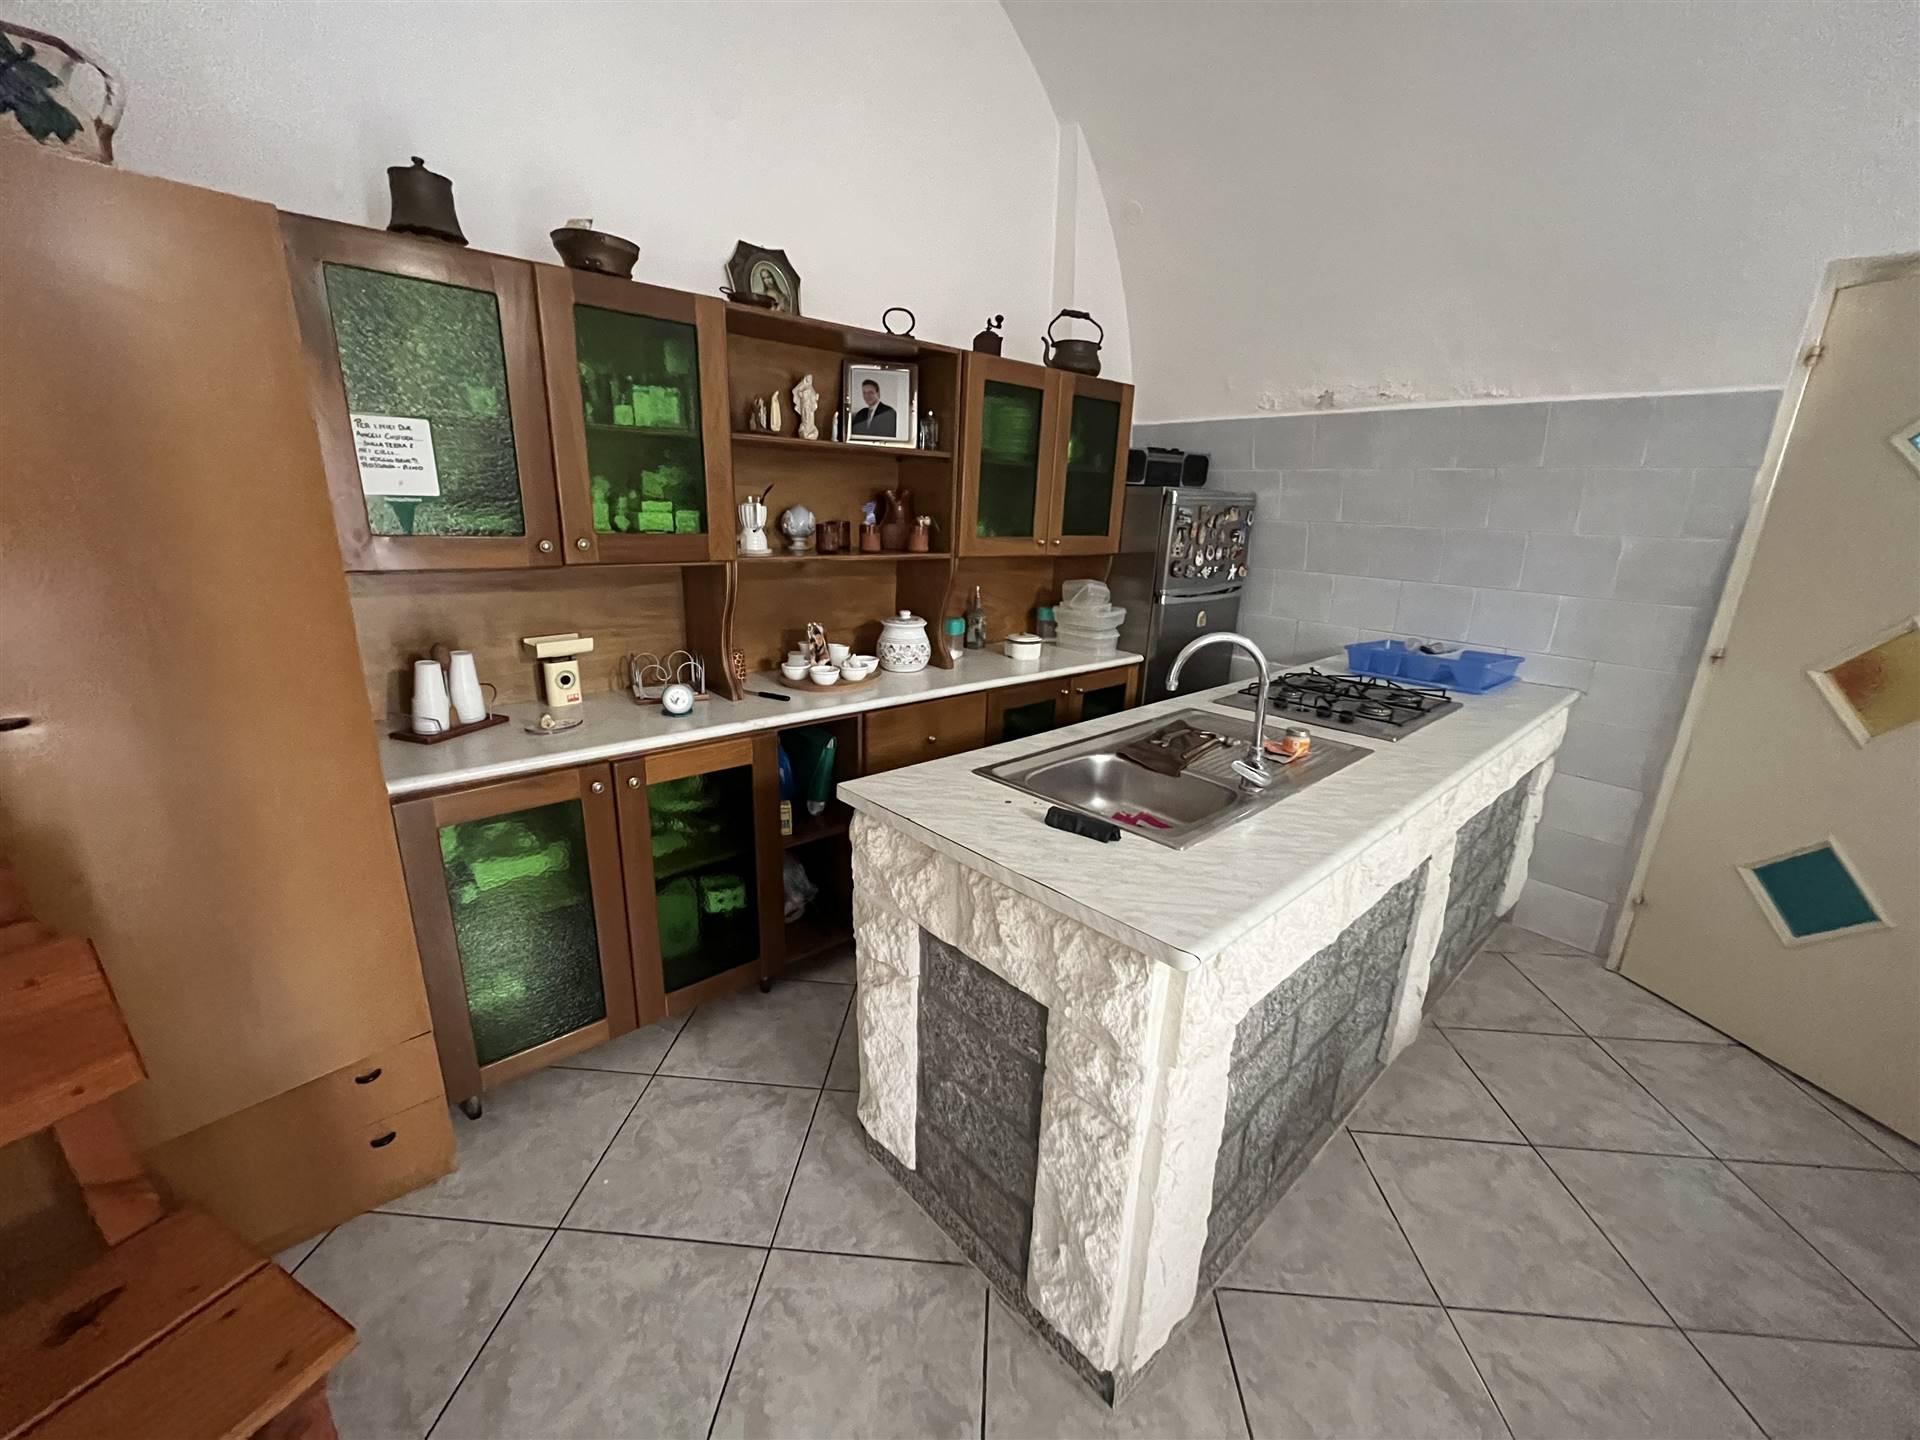 Casa singola in zona Carbonara - Ceglie a Bari